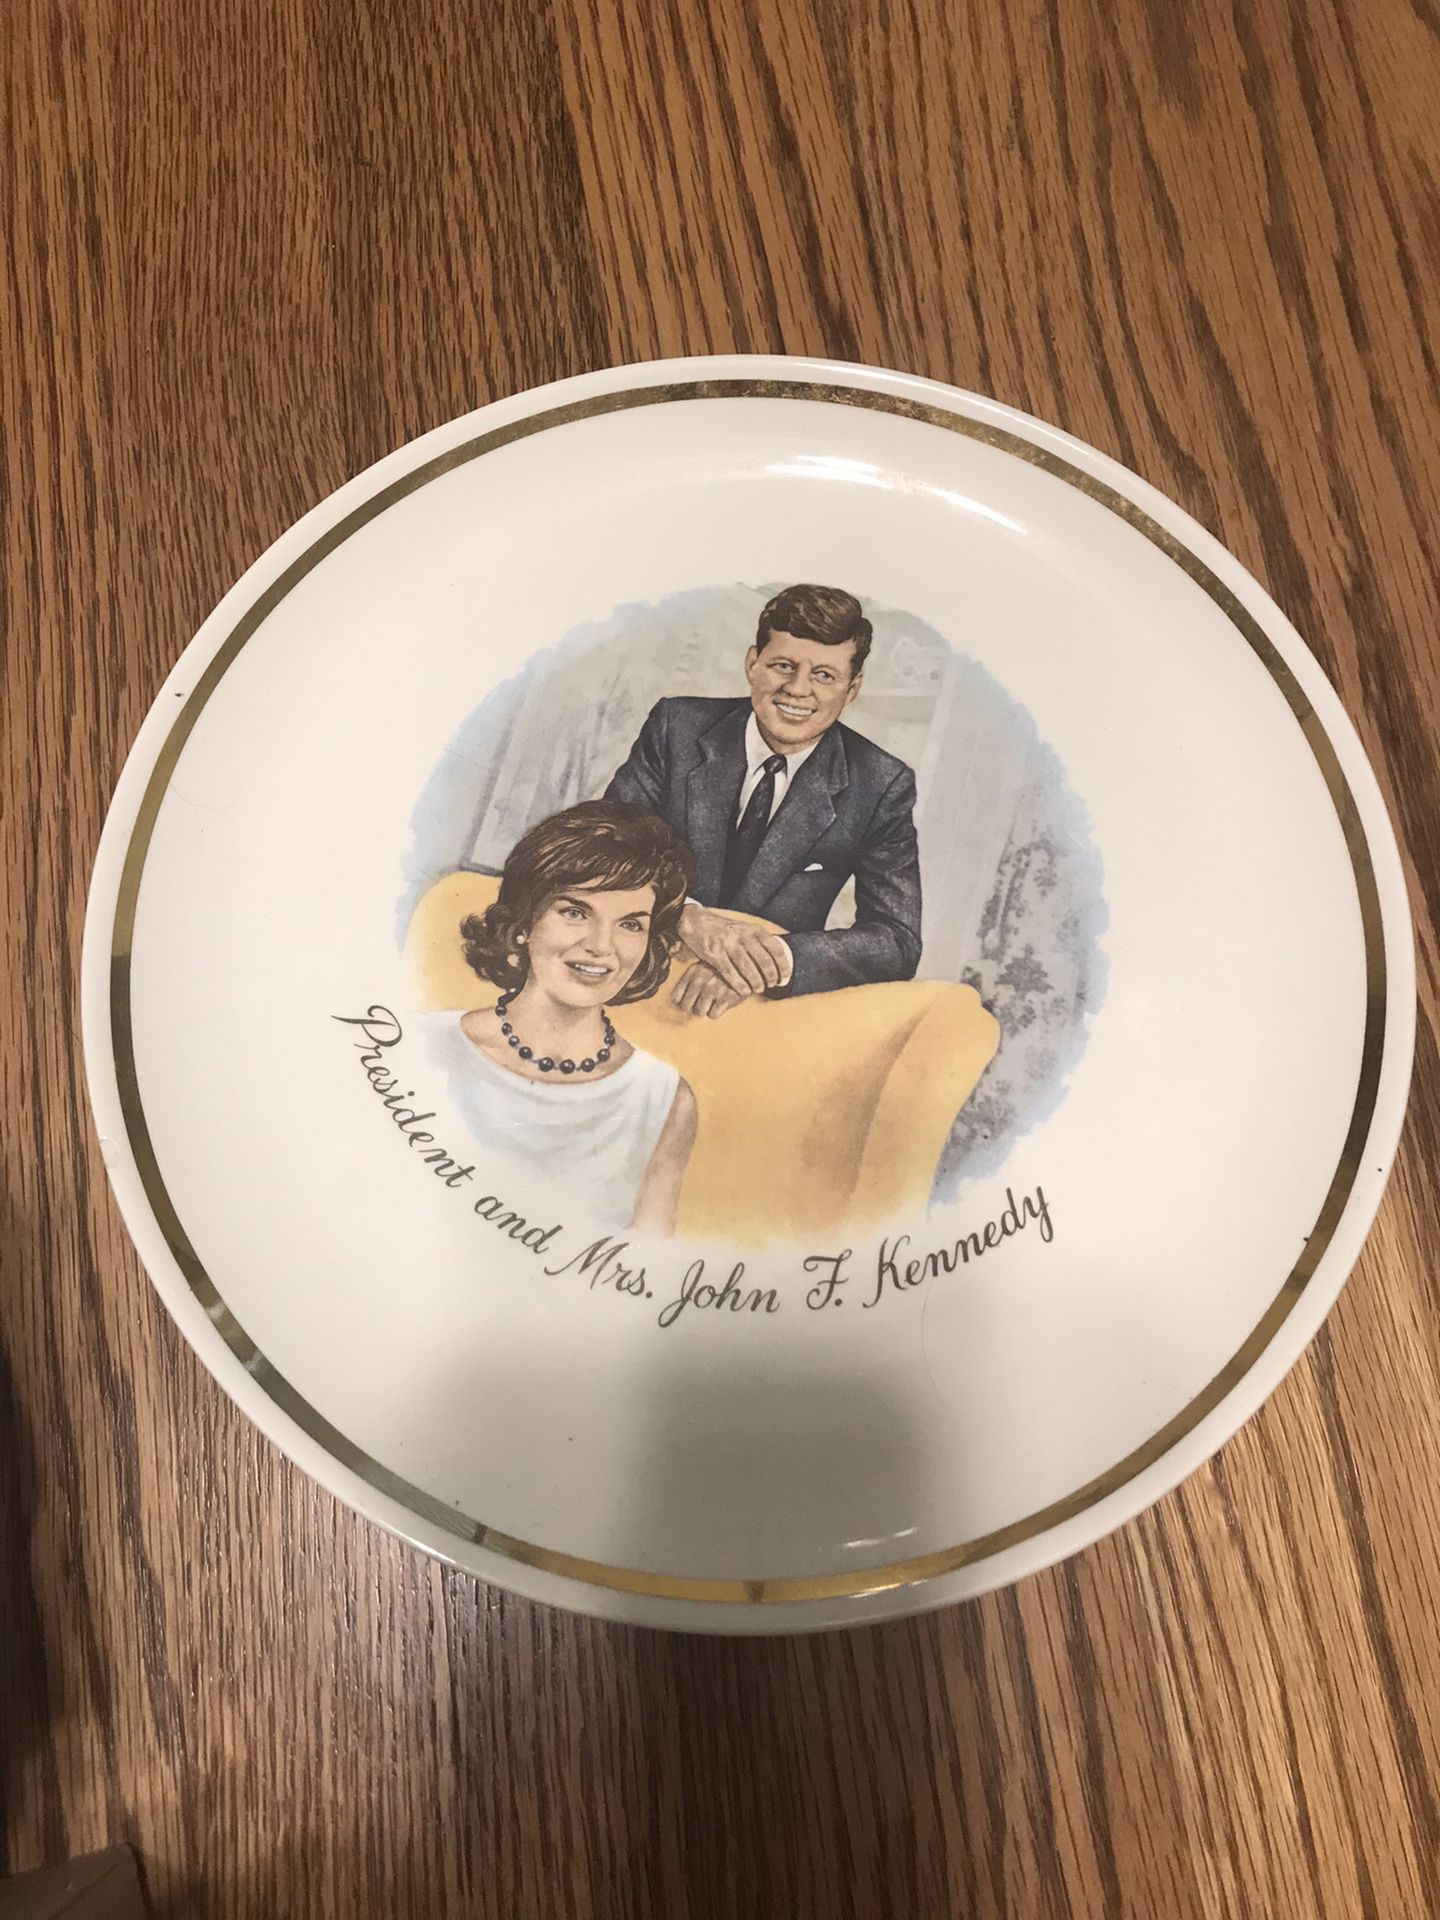 Mr & Mrs Kennedy Plate